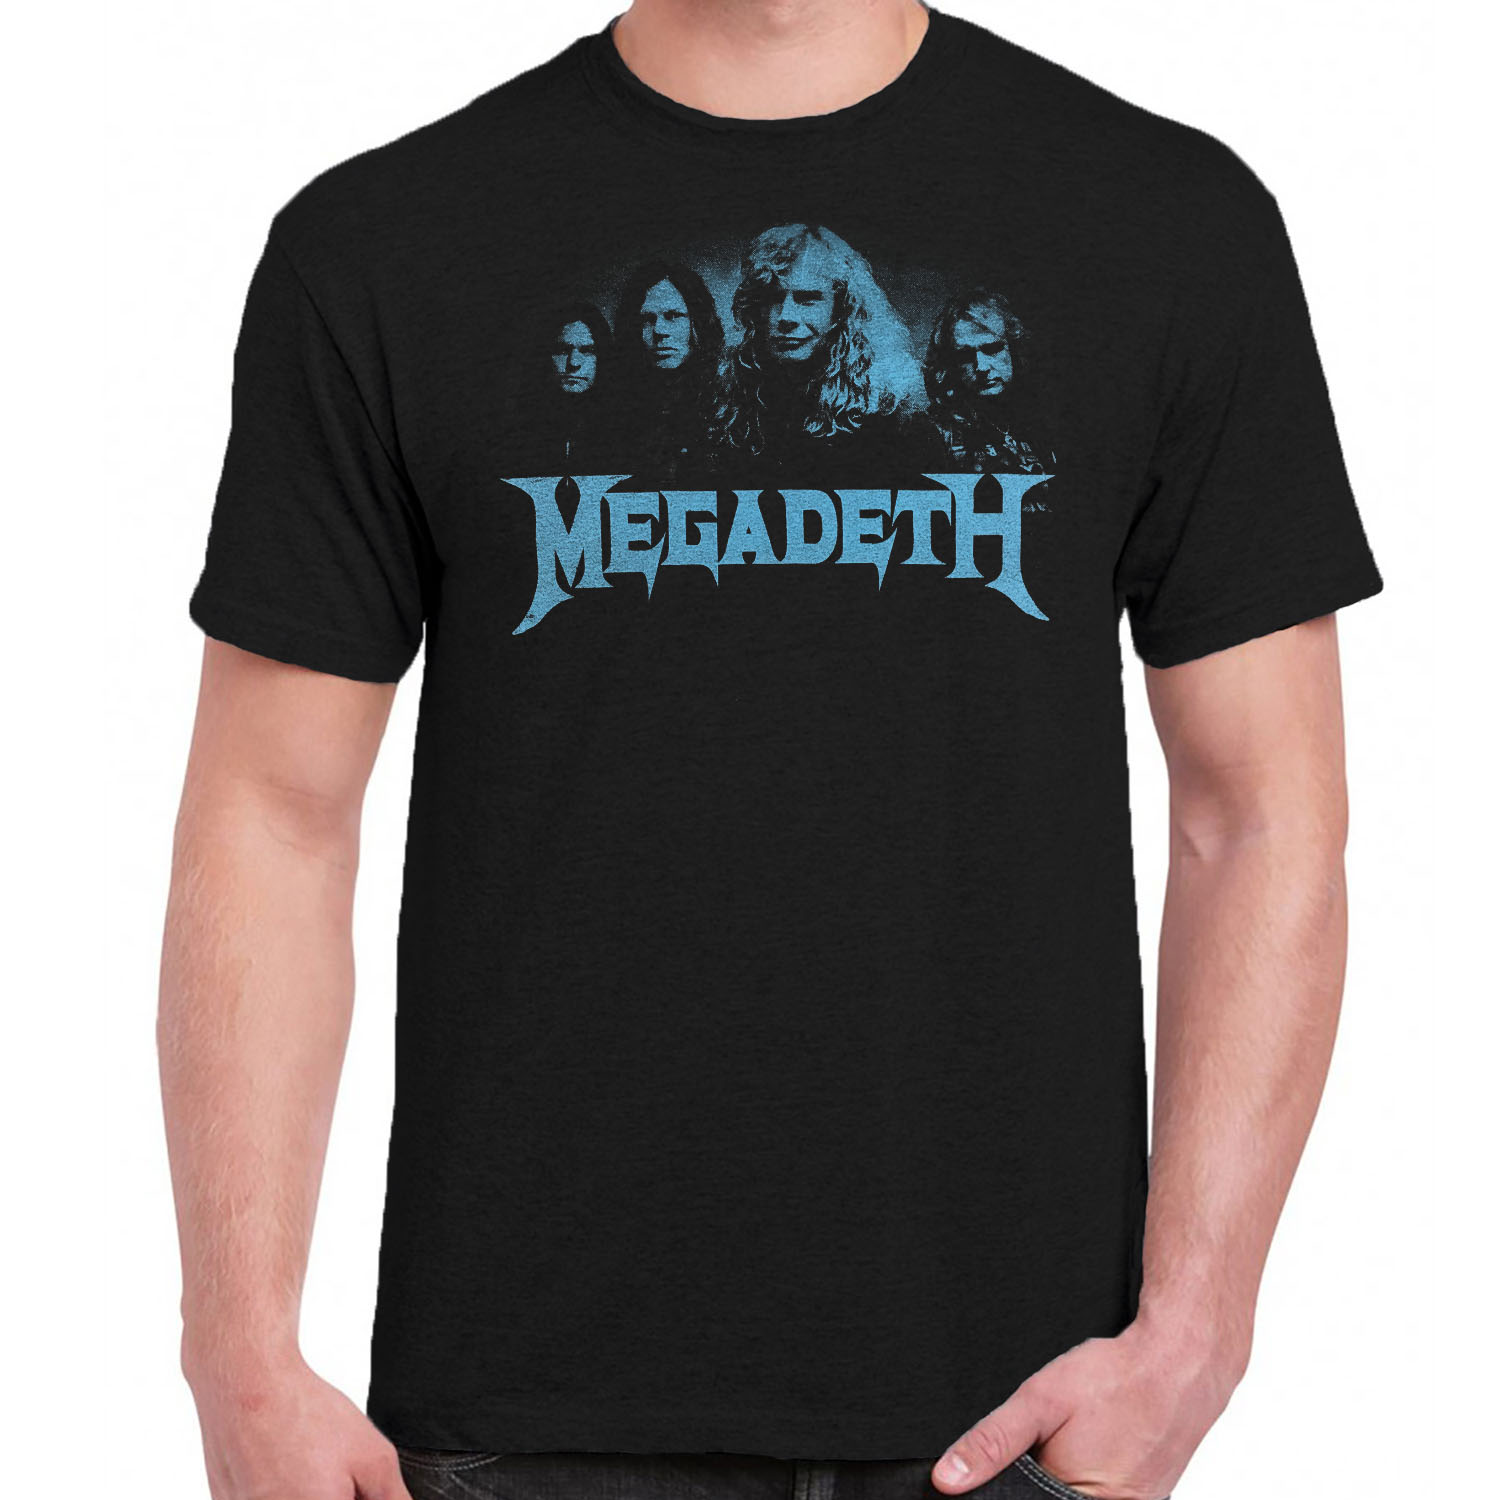 Megadeth t-shirt 80s